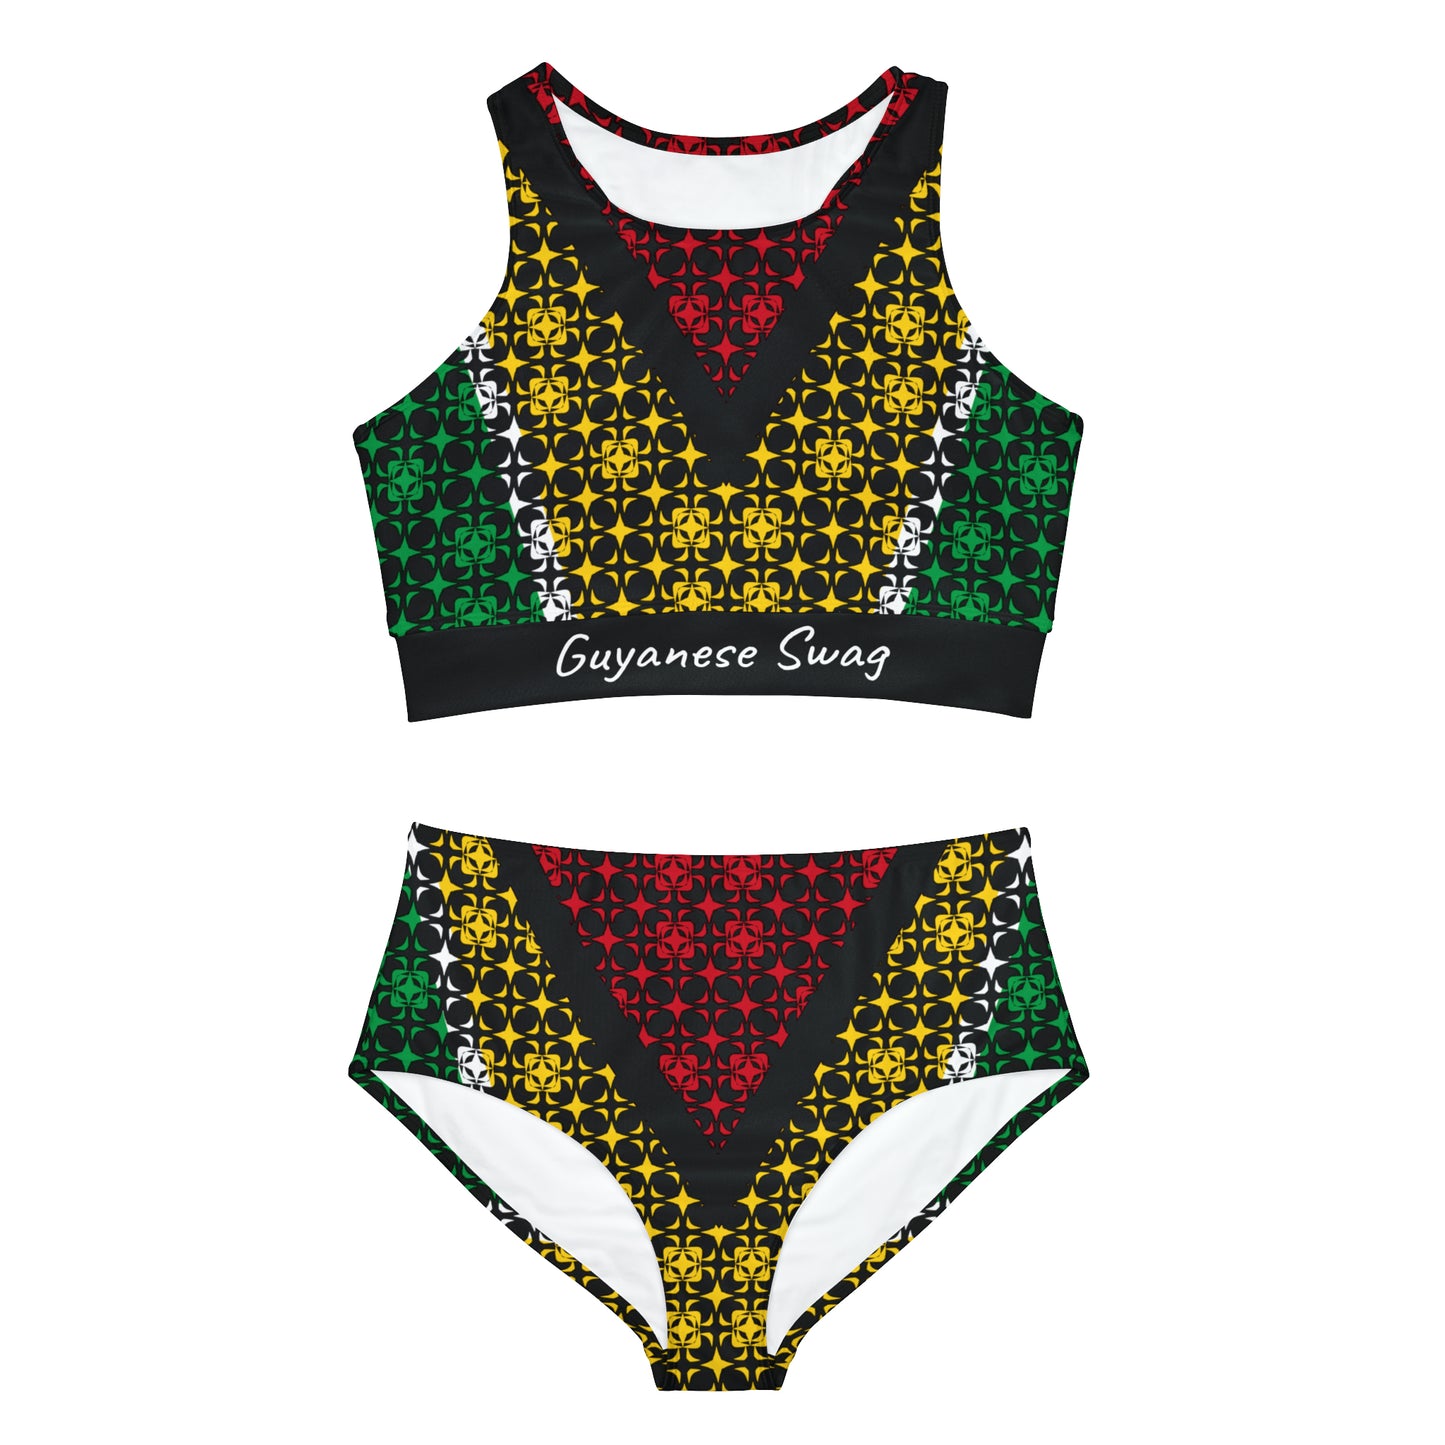 Ultimate Sporty Bikini Set with Abstract Guyana Flag.